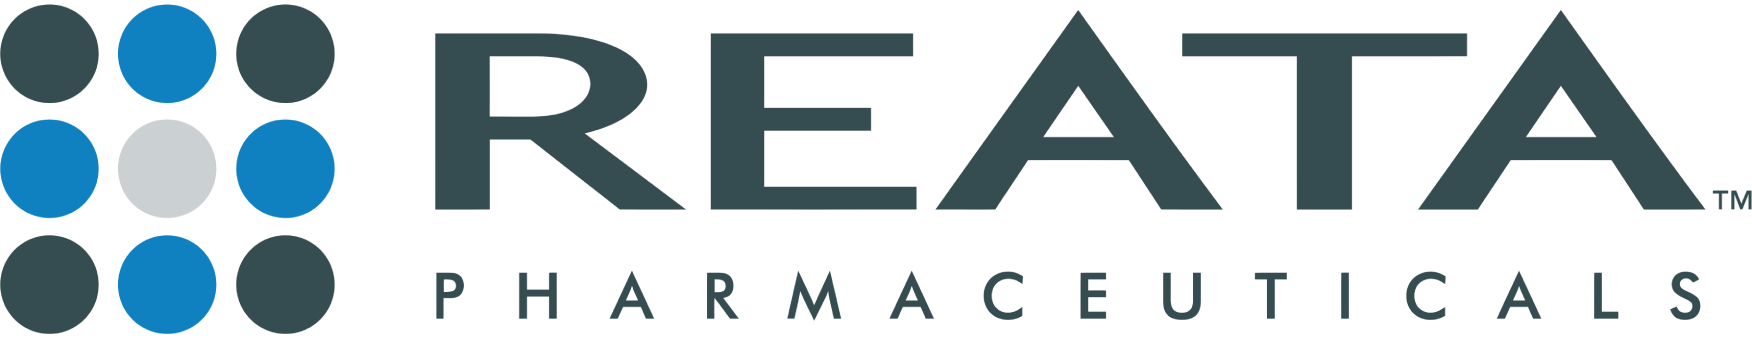 Reata Pharmaceuticals
 logo large (transparent PNG)